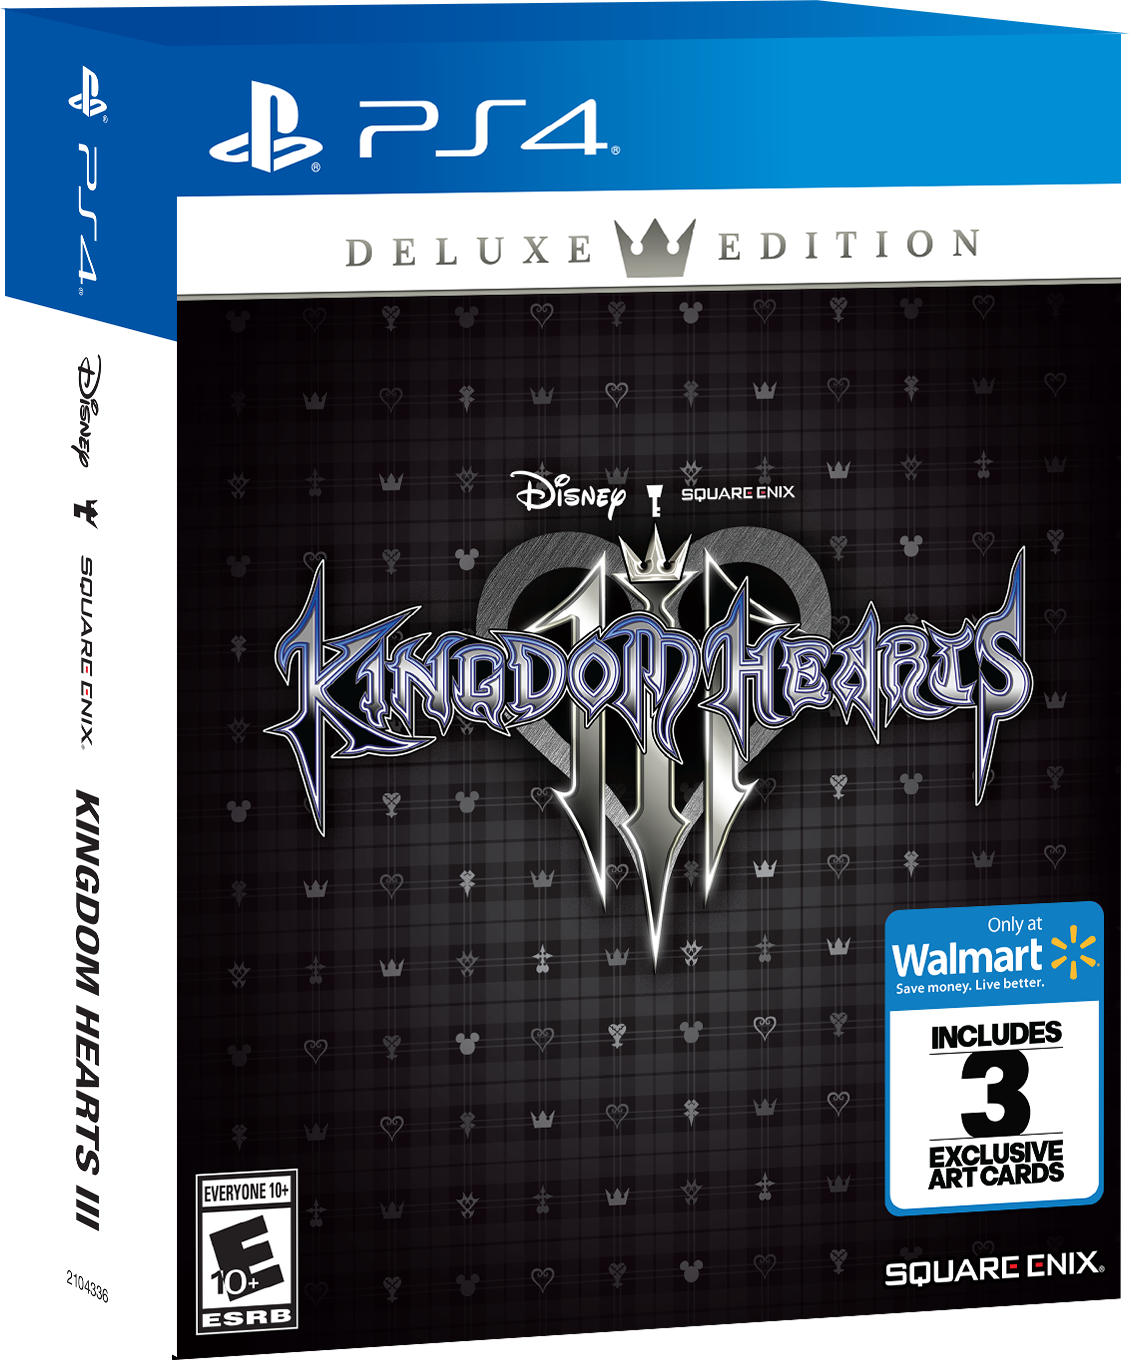 Walmart Exclusive: Kingdom Hearts 3 Deluxe Edition, Square Enix, PlayStation 4, 662248921914 - image 1 of 39